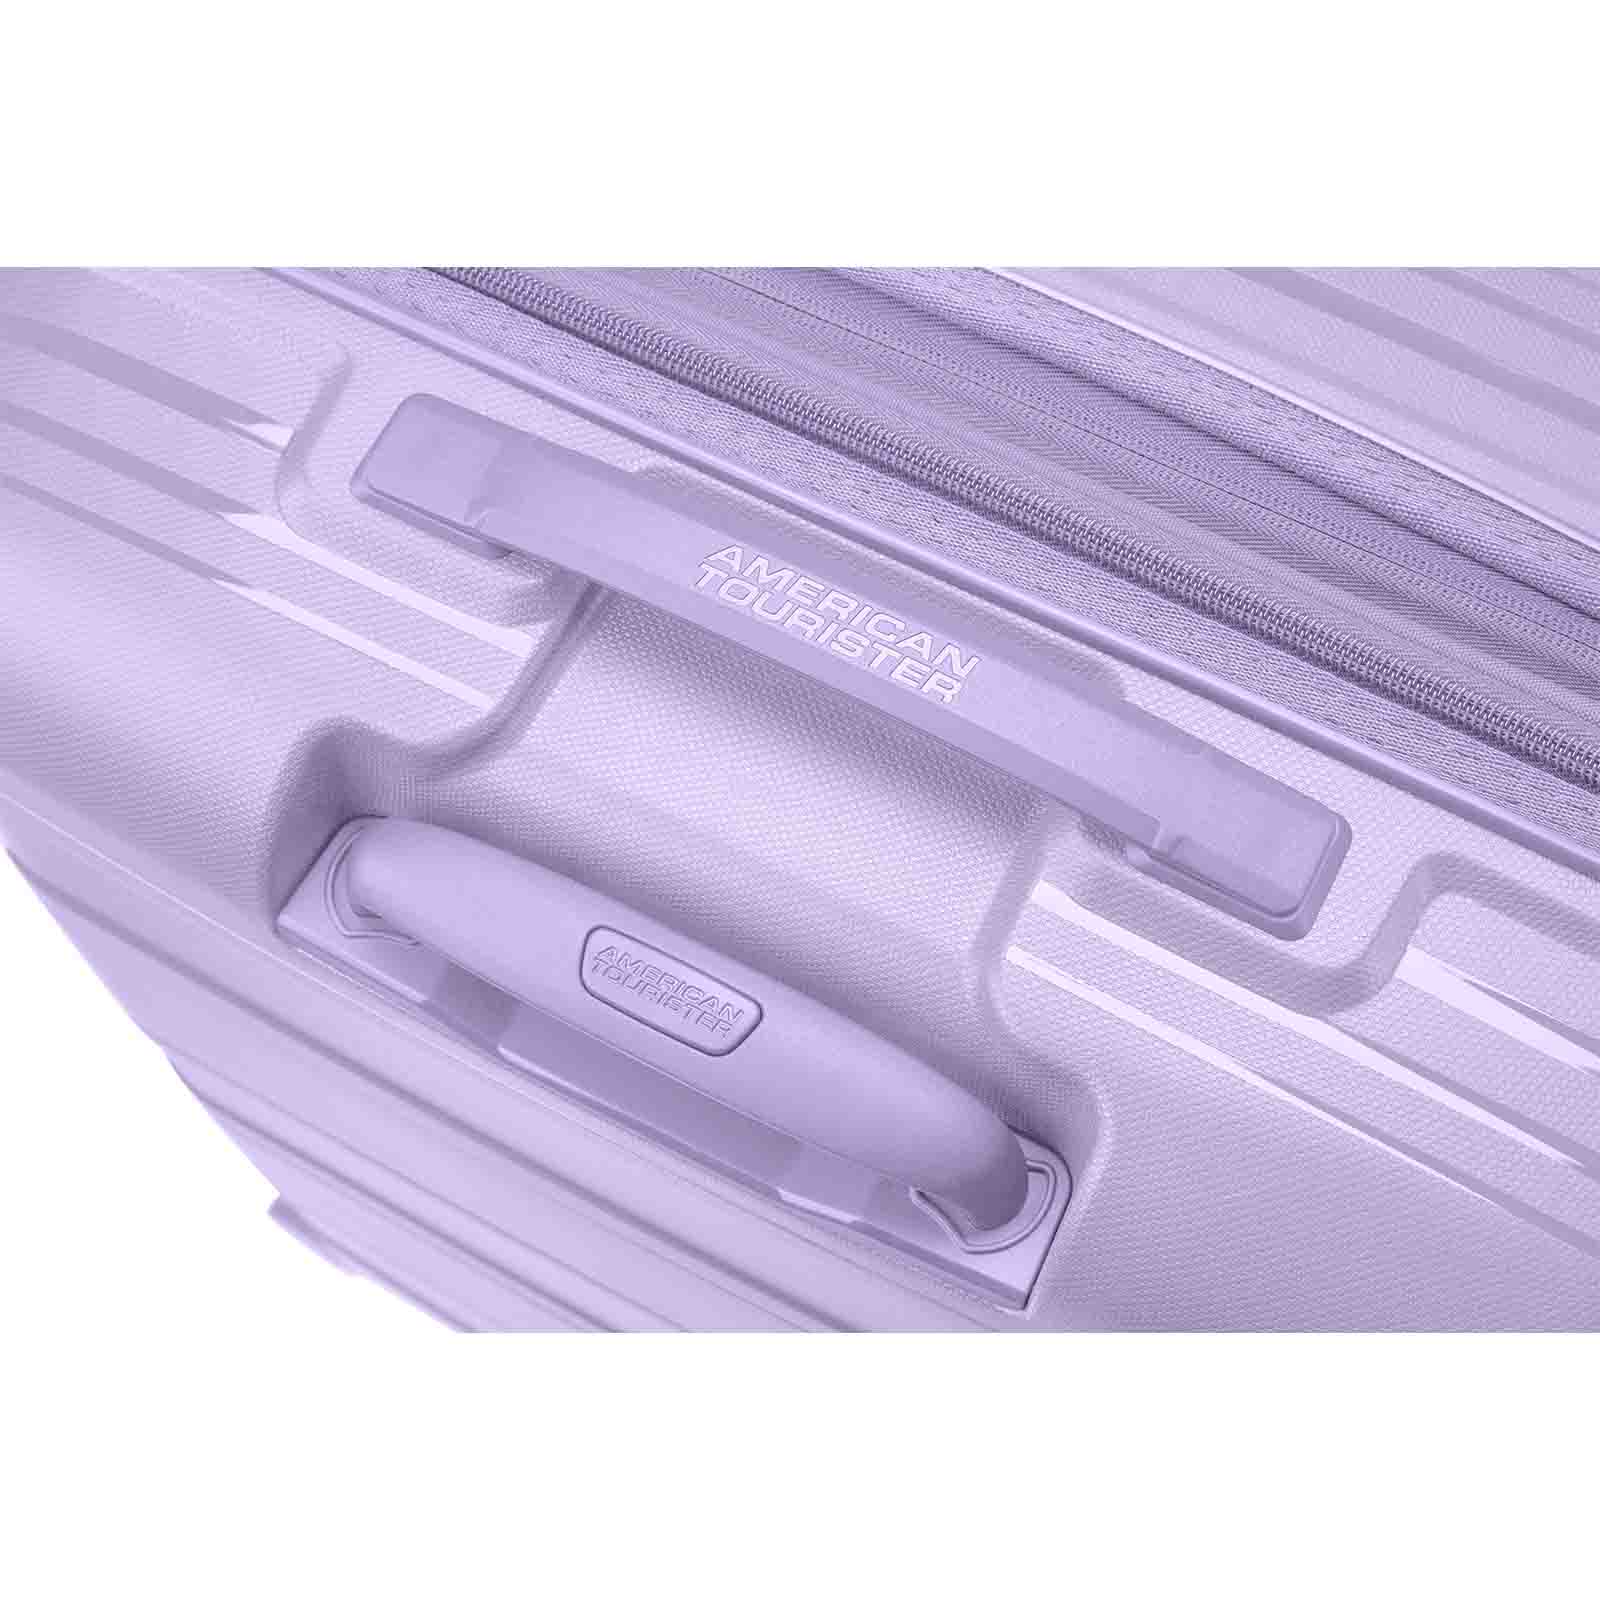 American-Tourister-Light-Max-69cm-Suitcase-Lavender-Handle